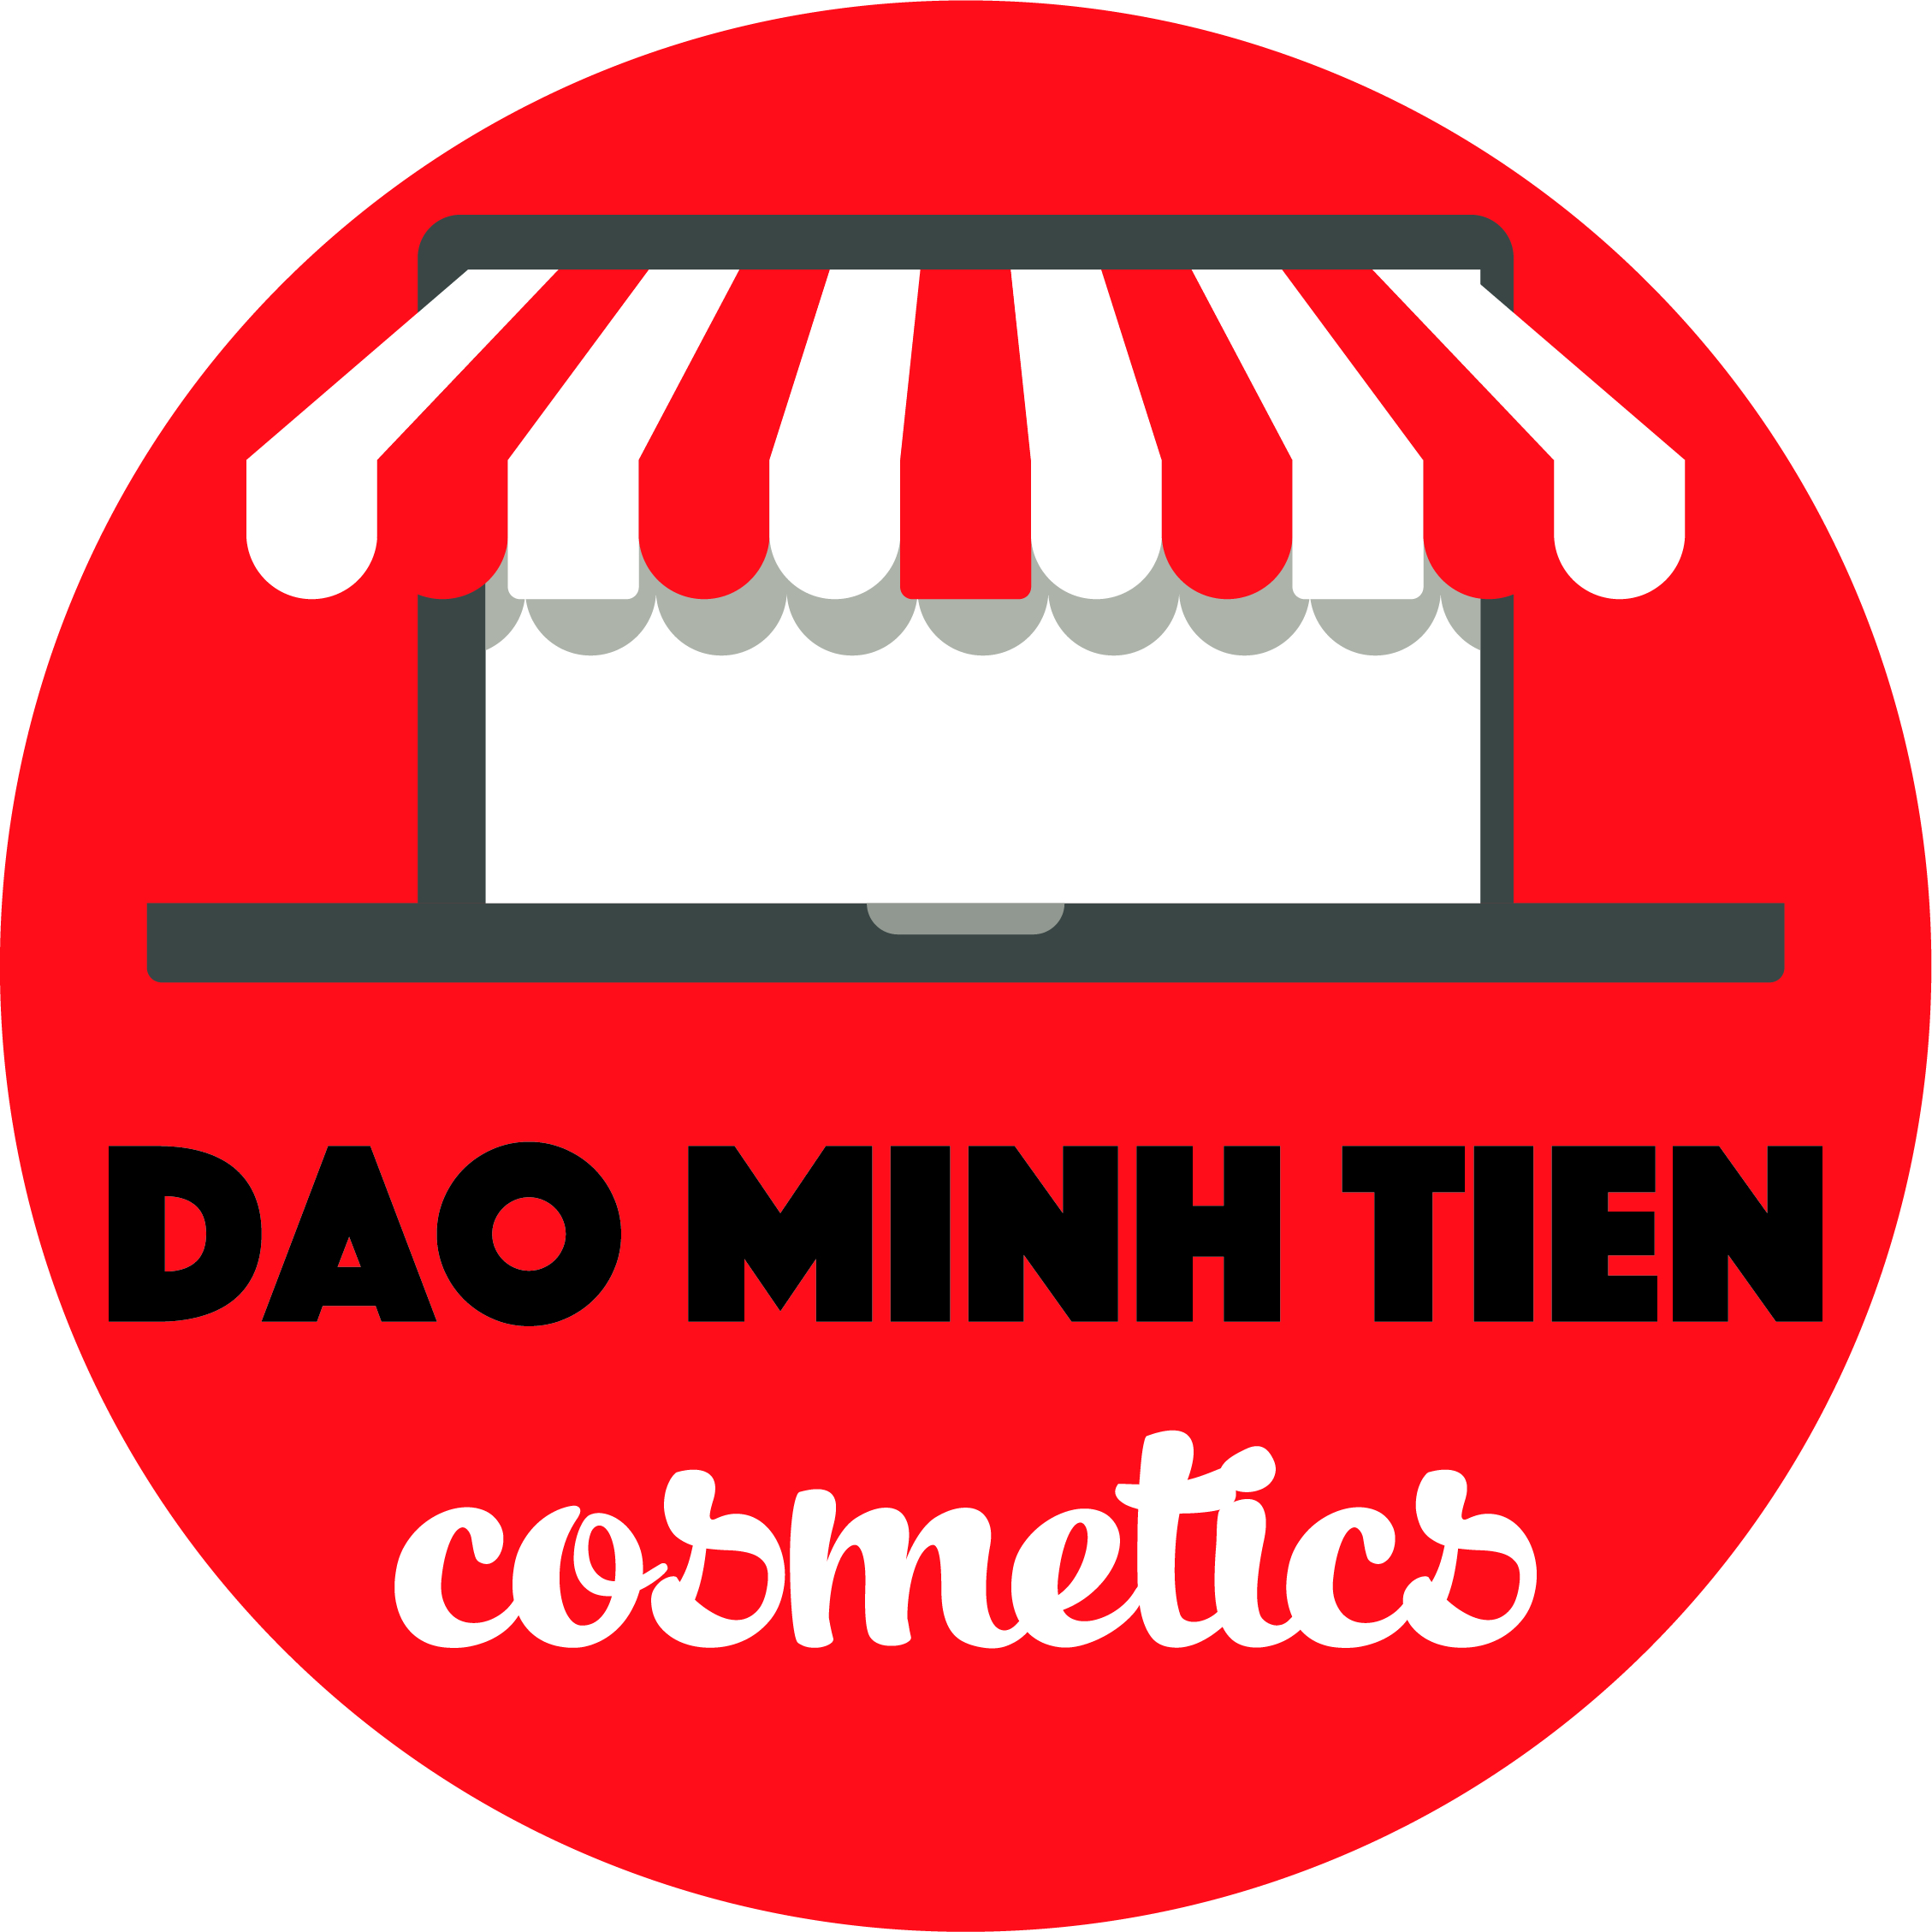 Dao Minh Tien Cosmetics